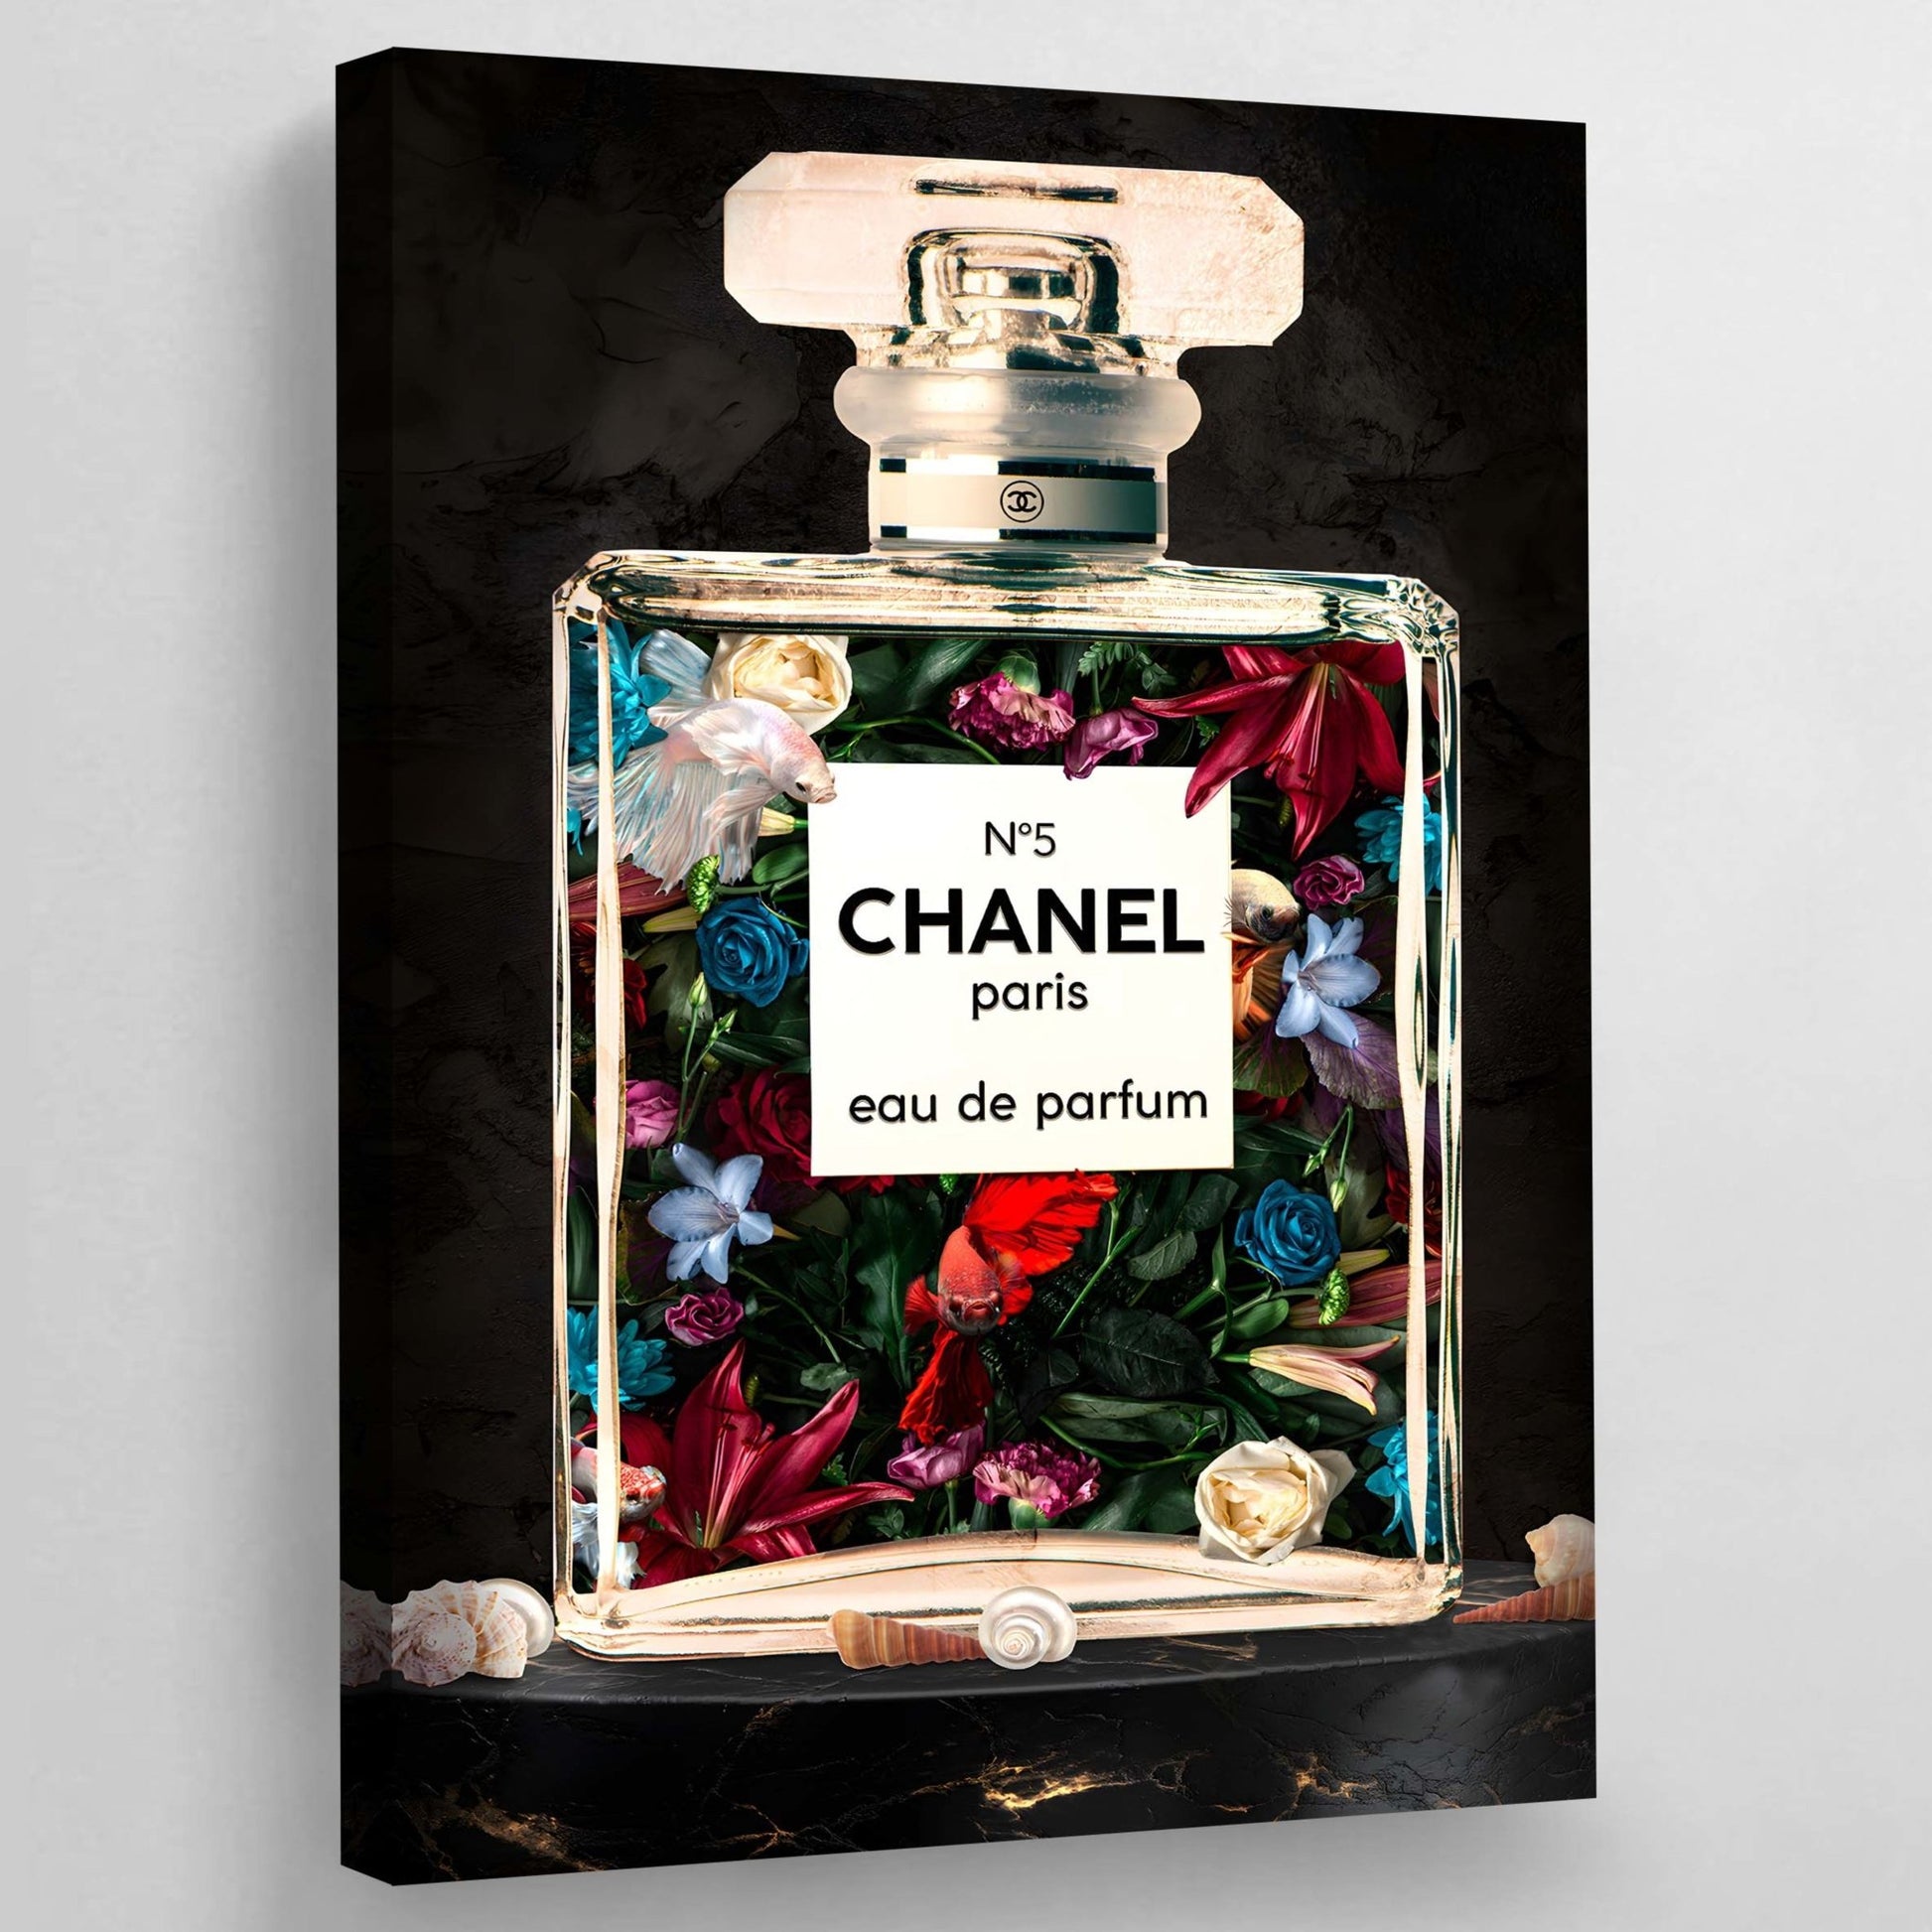 Chanel Bottle Art: Canvas Prints, Frames & Posters